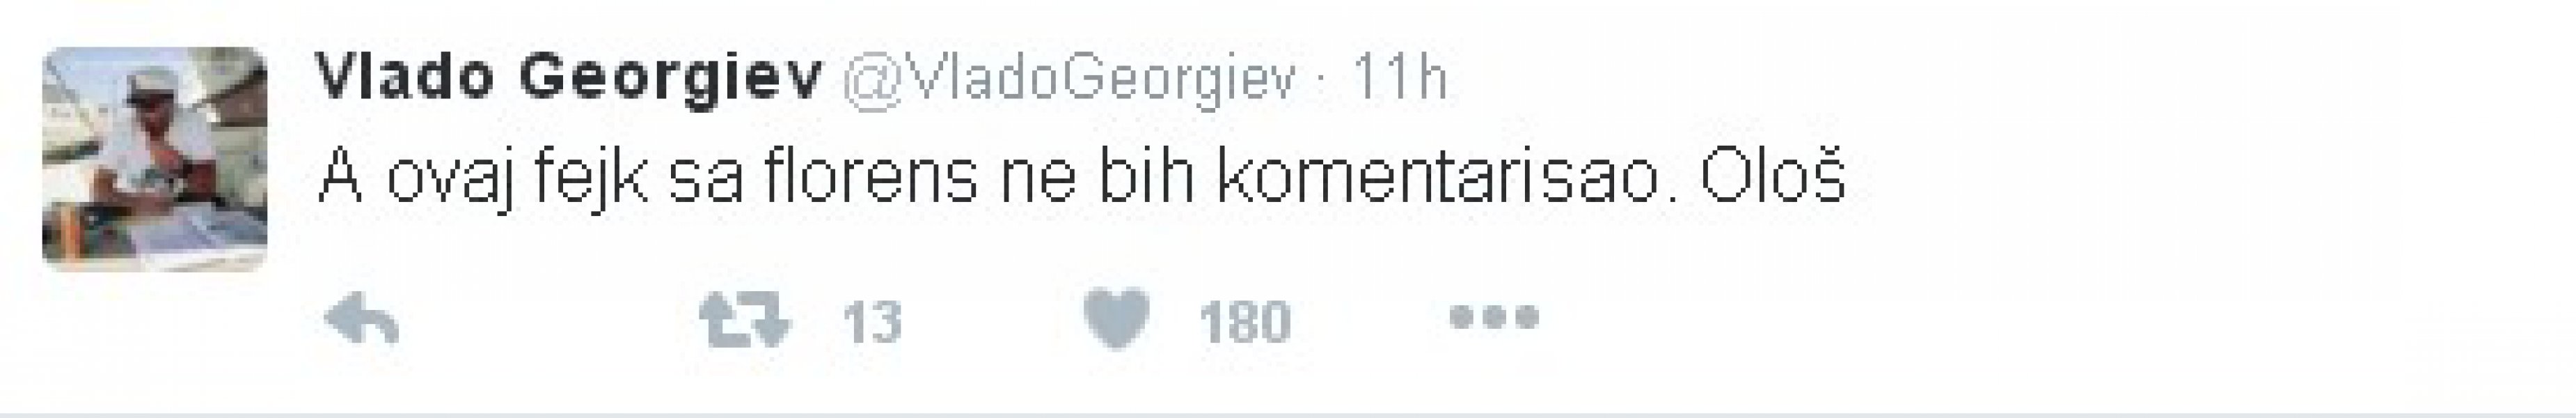 vlado-georgiev-twitter2